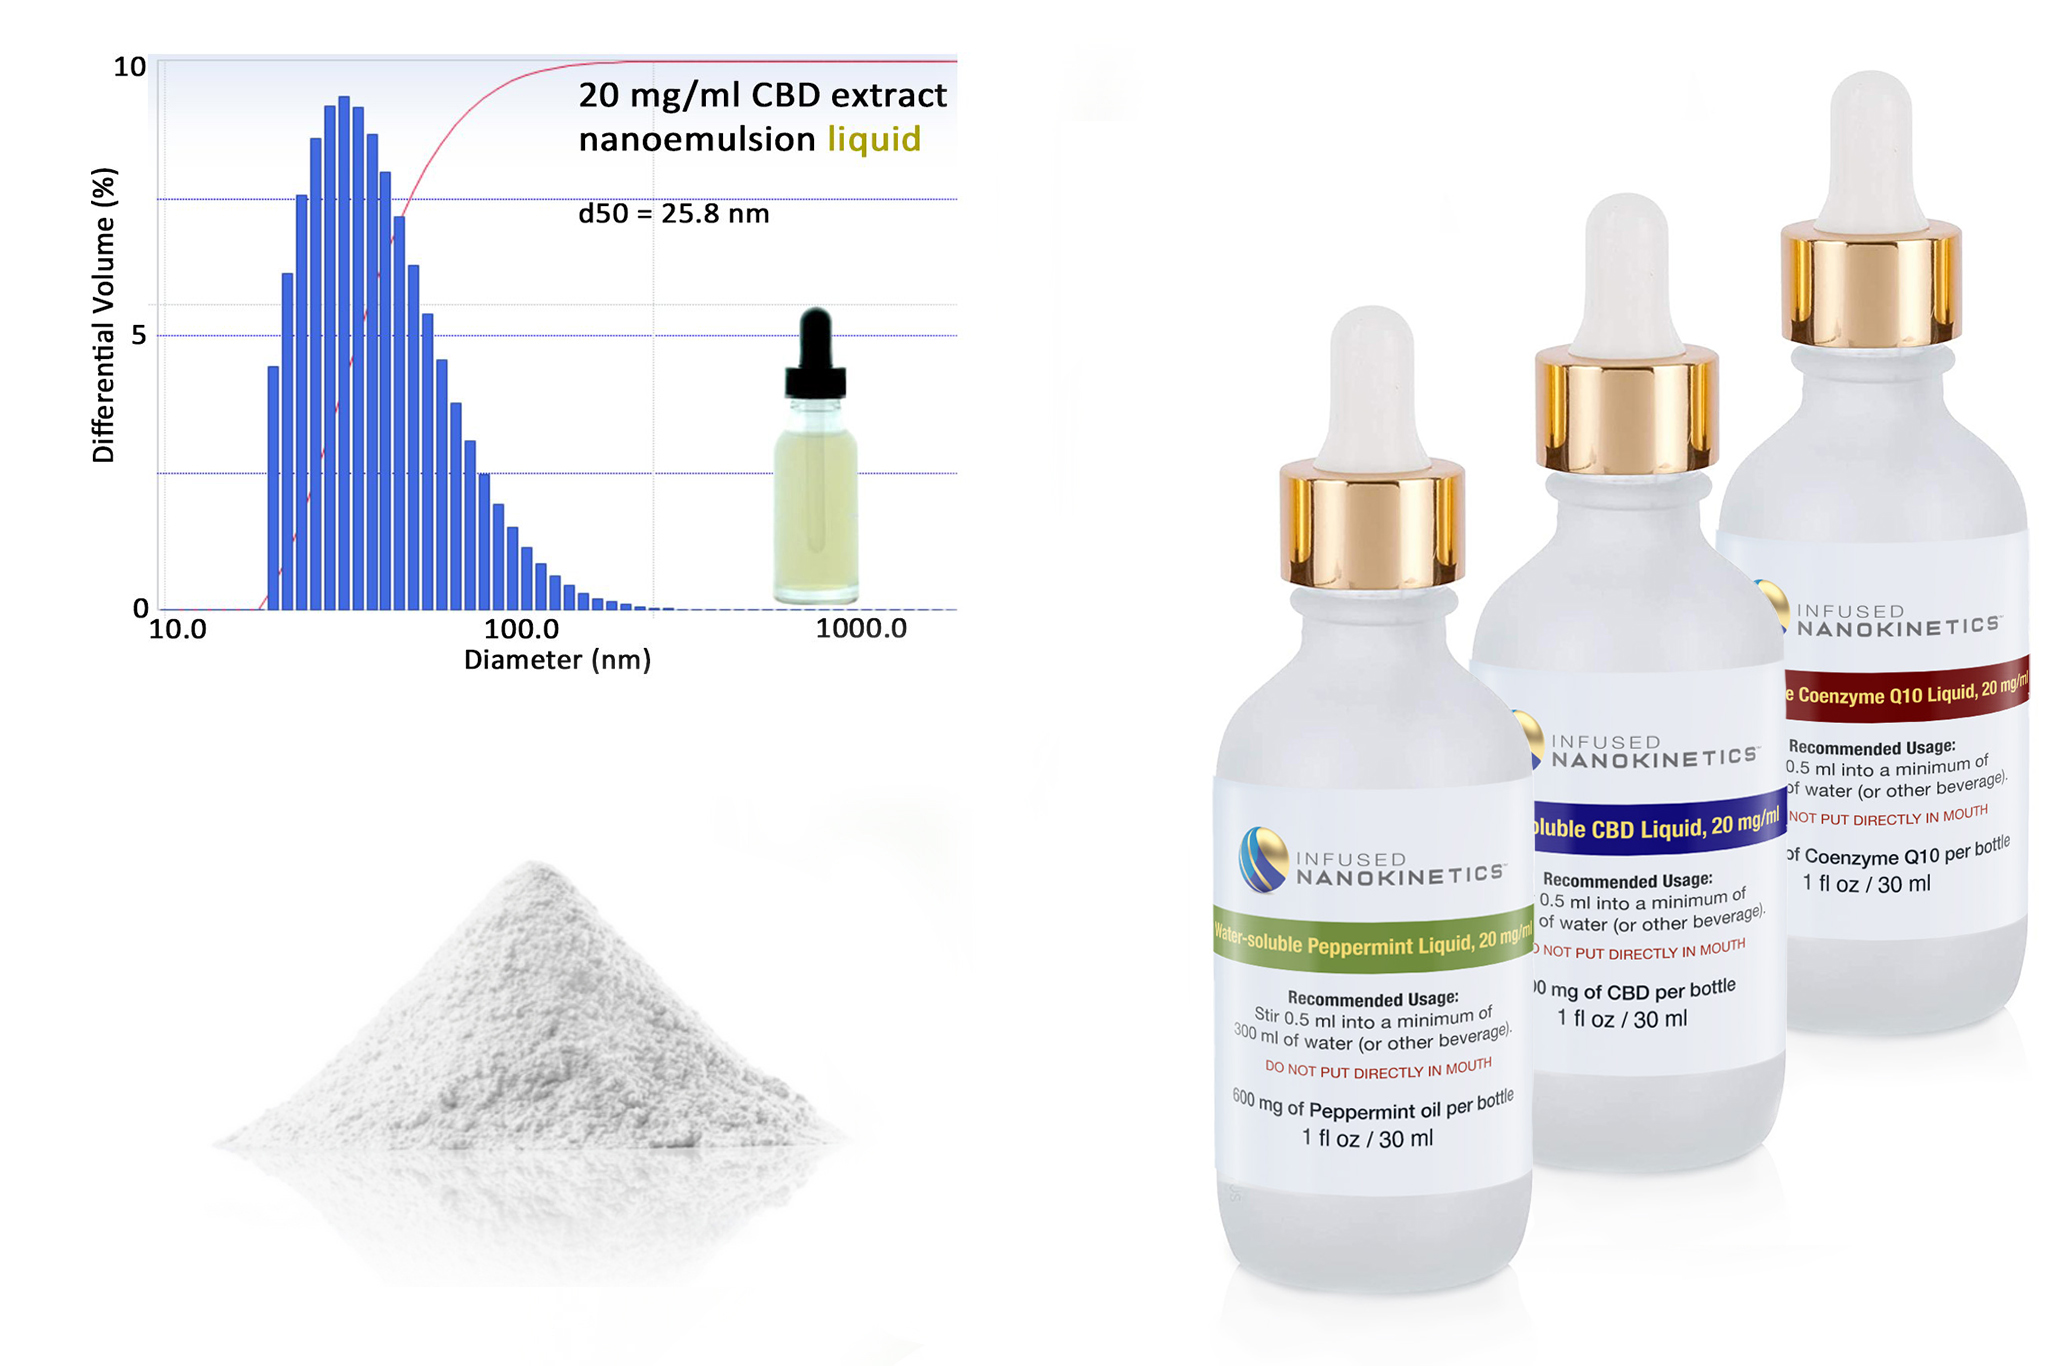 Nanoemulsion samples - water soluble liquids and solid powders, alkaloids, terpenes nanoemulsion